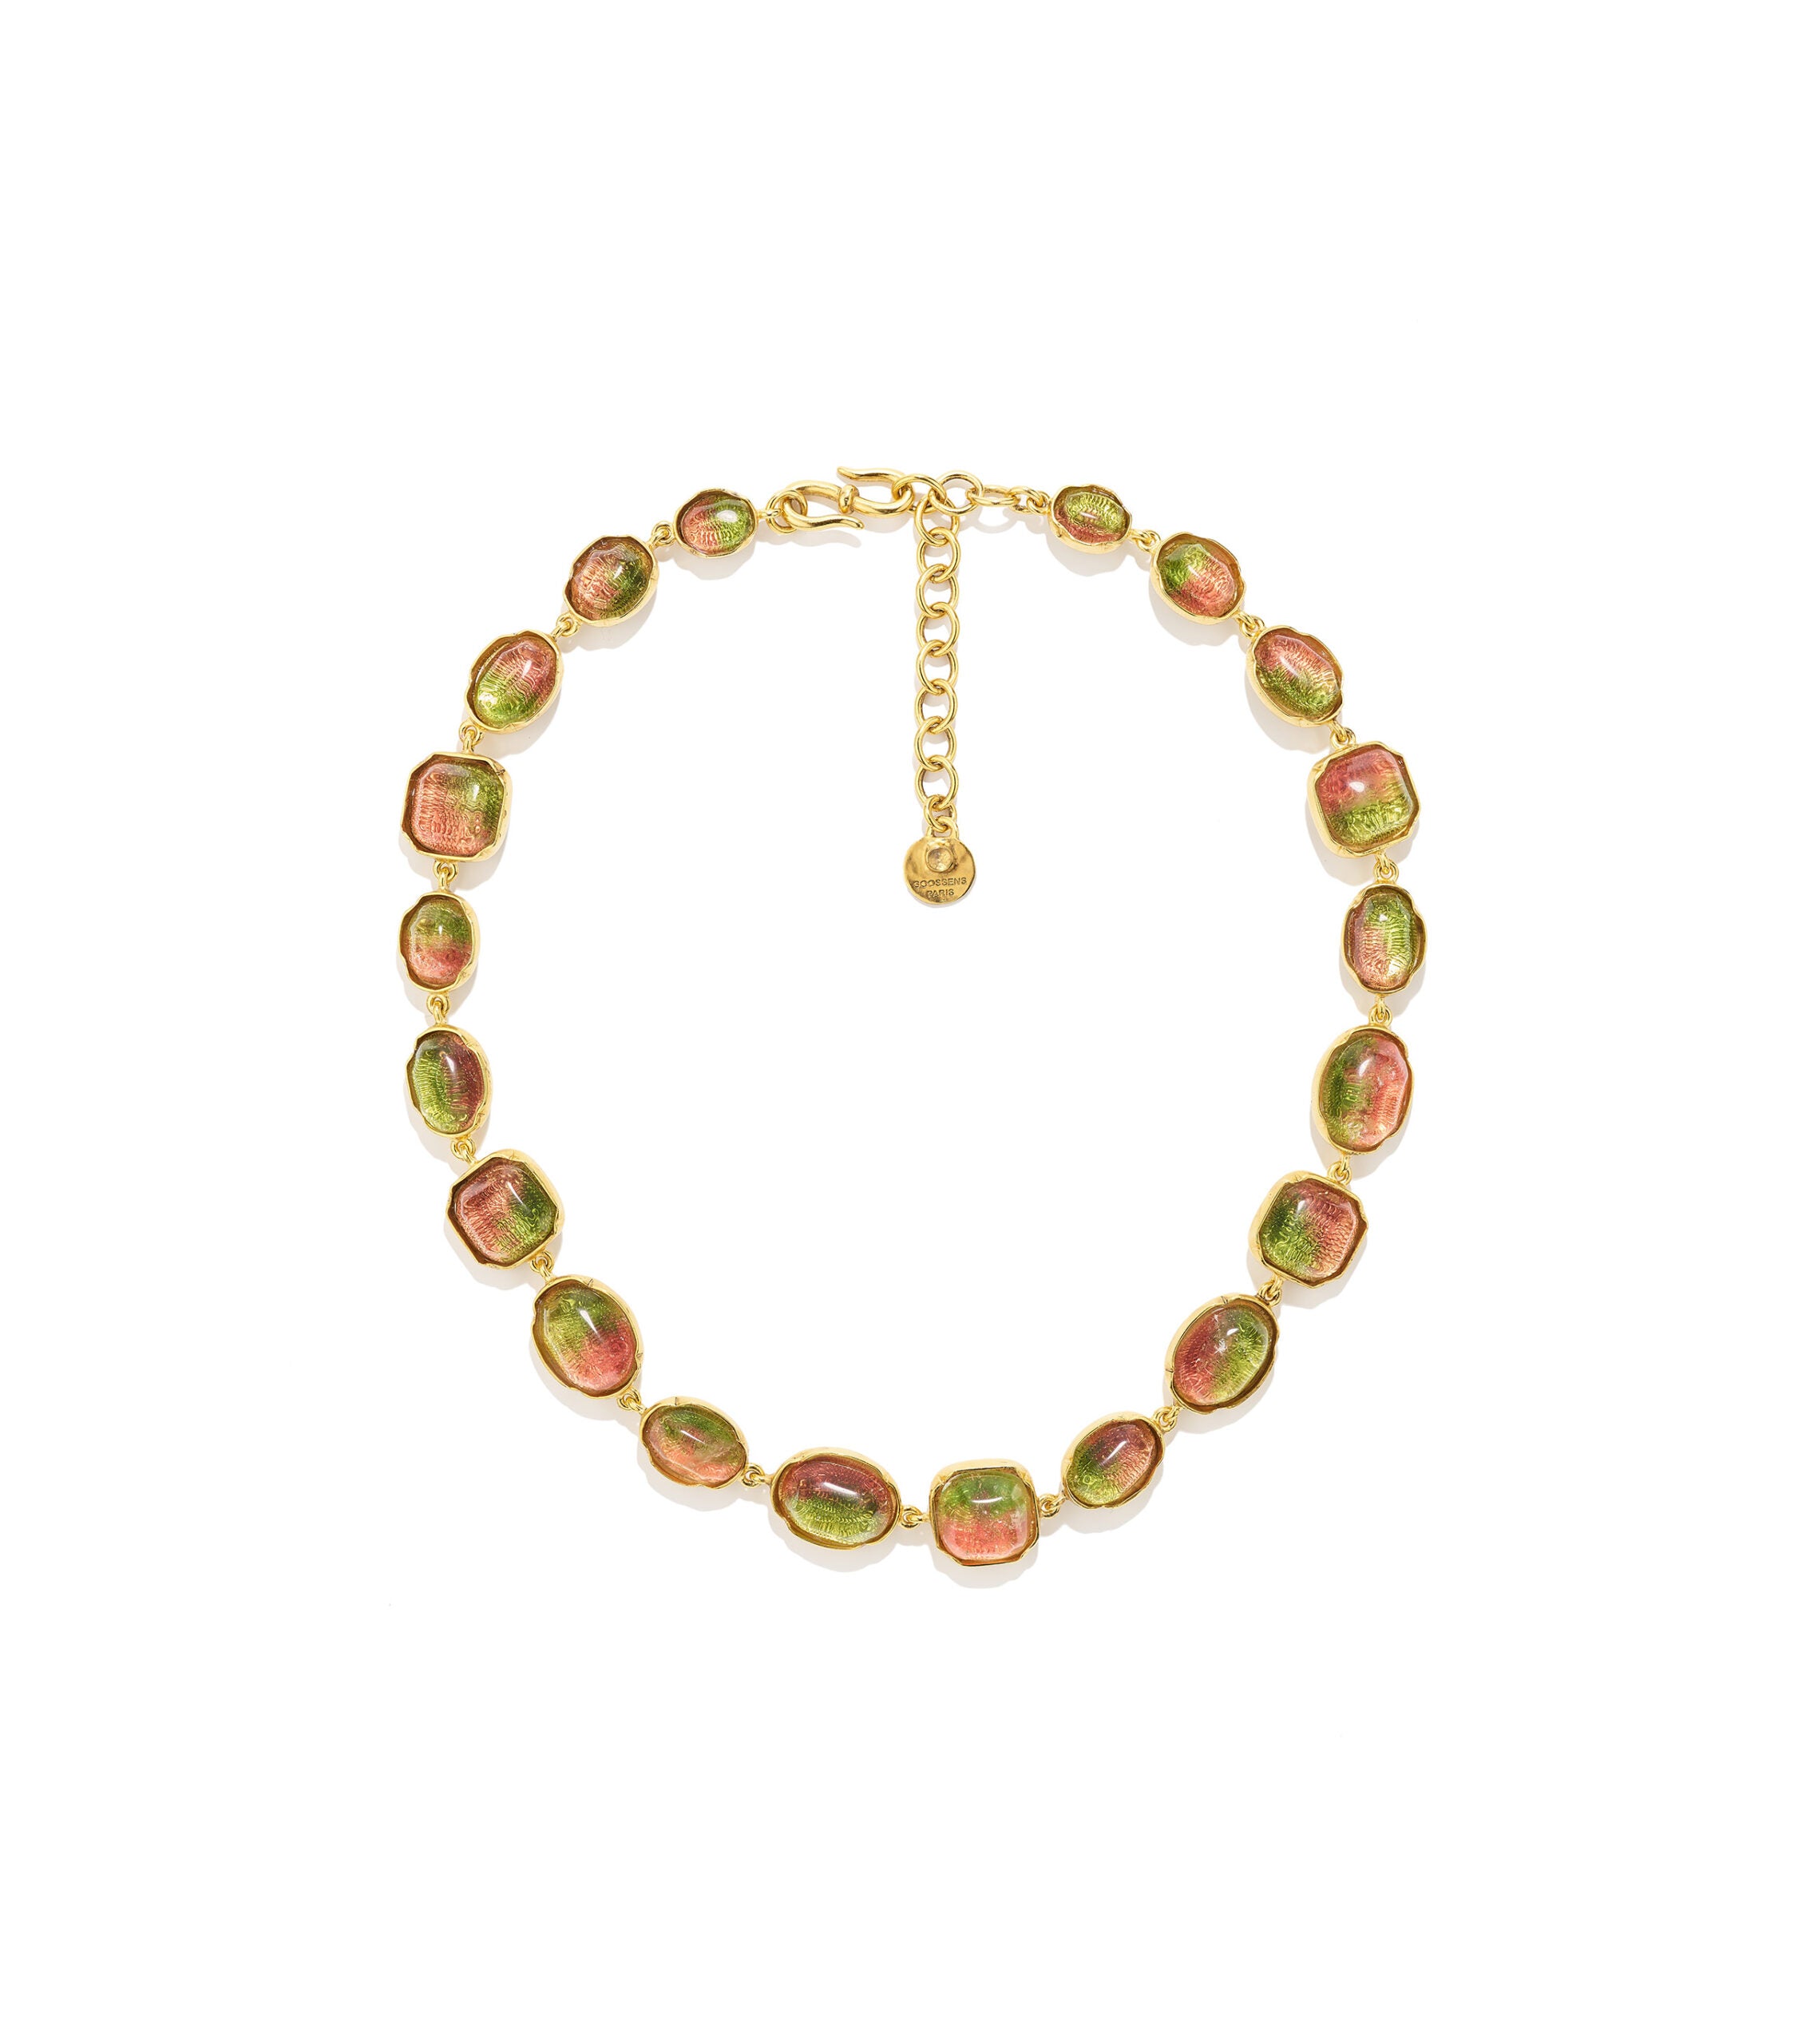 Cabochons Watermelon tie & dye necklace - Online exclusive